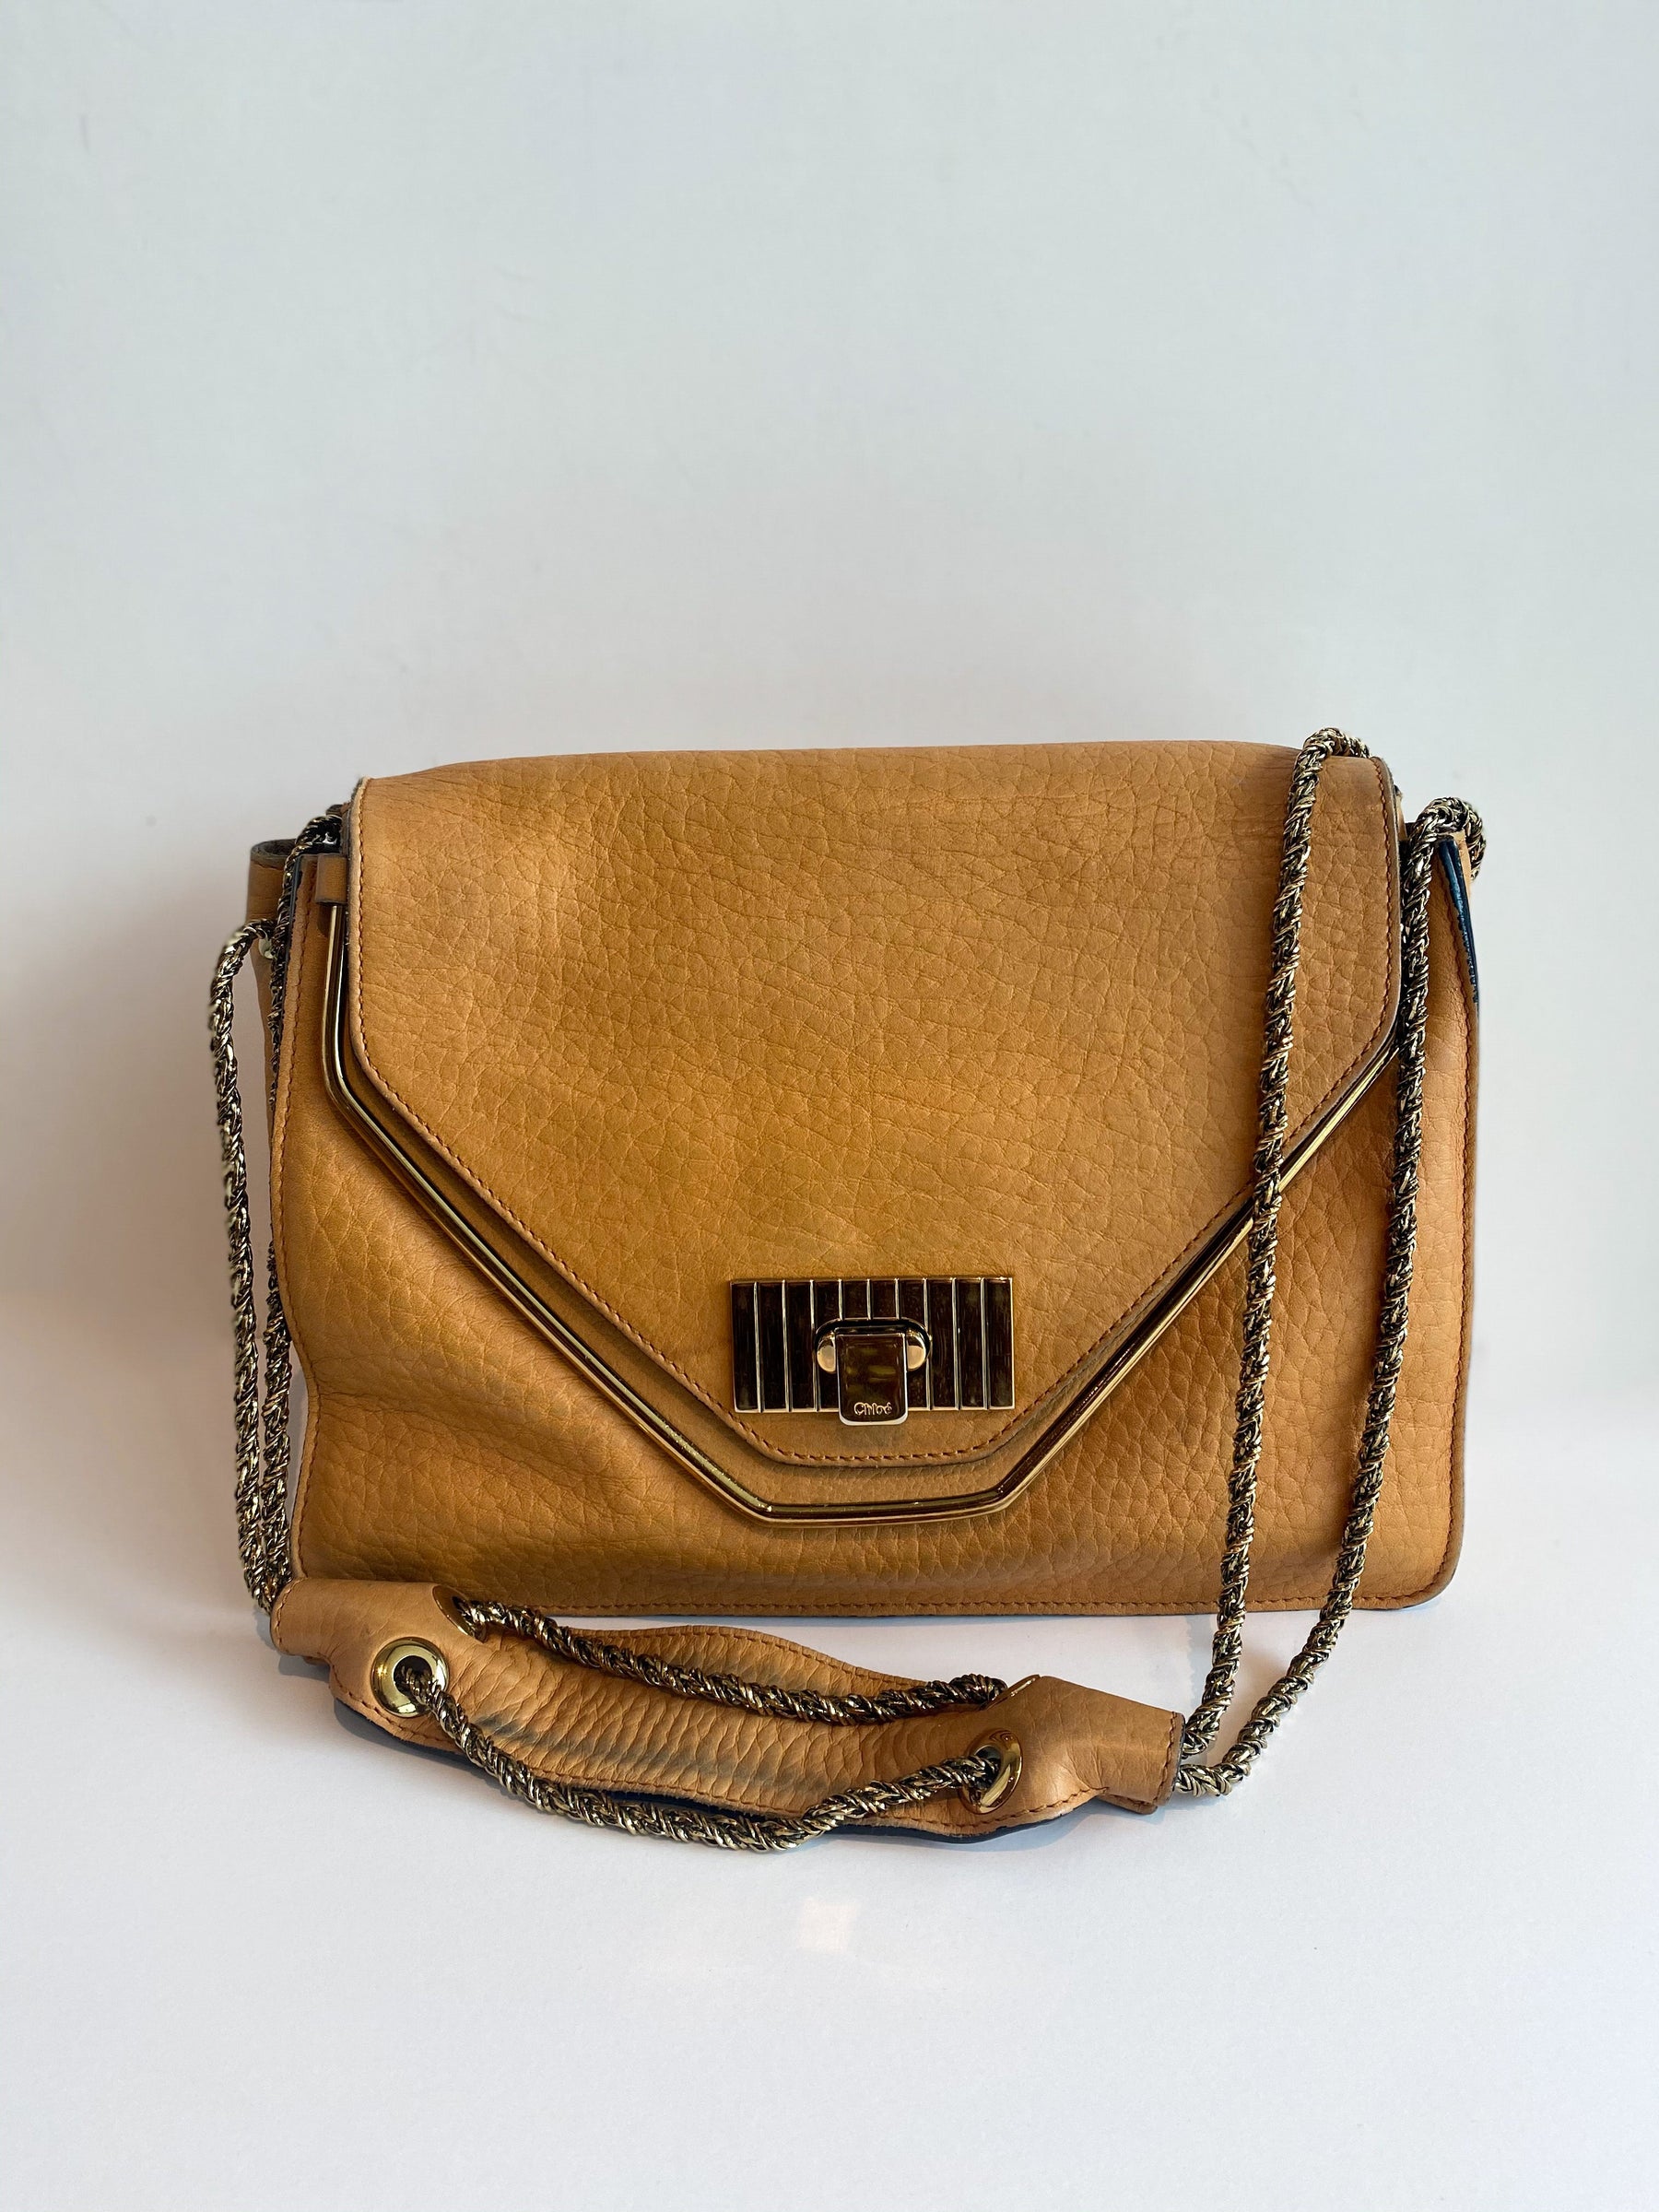 Chloe Sally Bag Flap Handbag Tan Leather